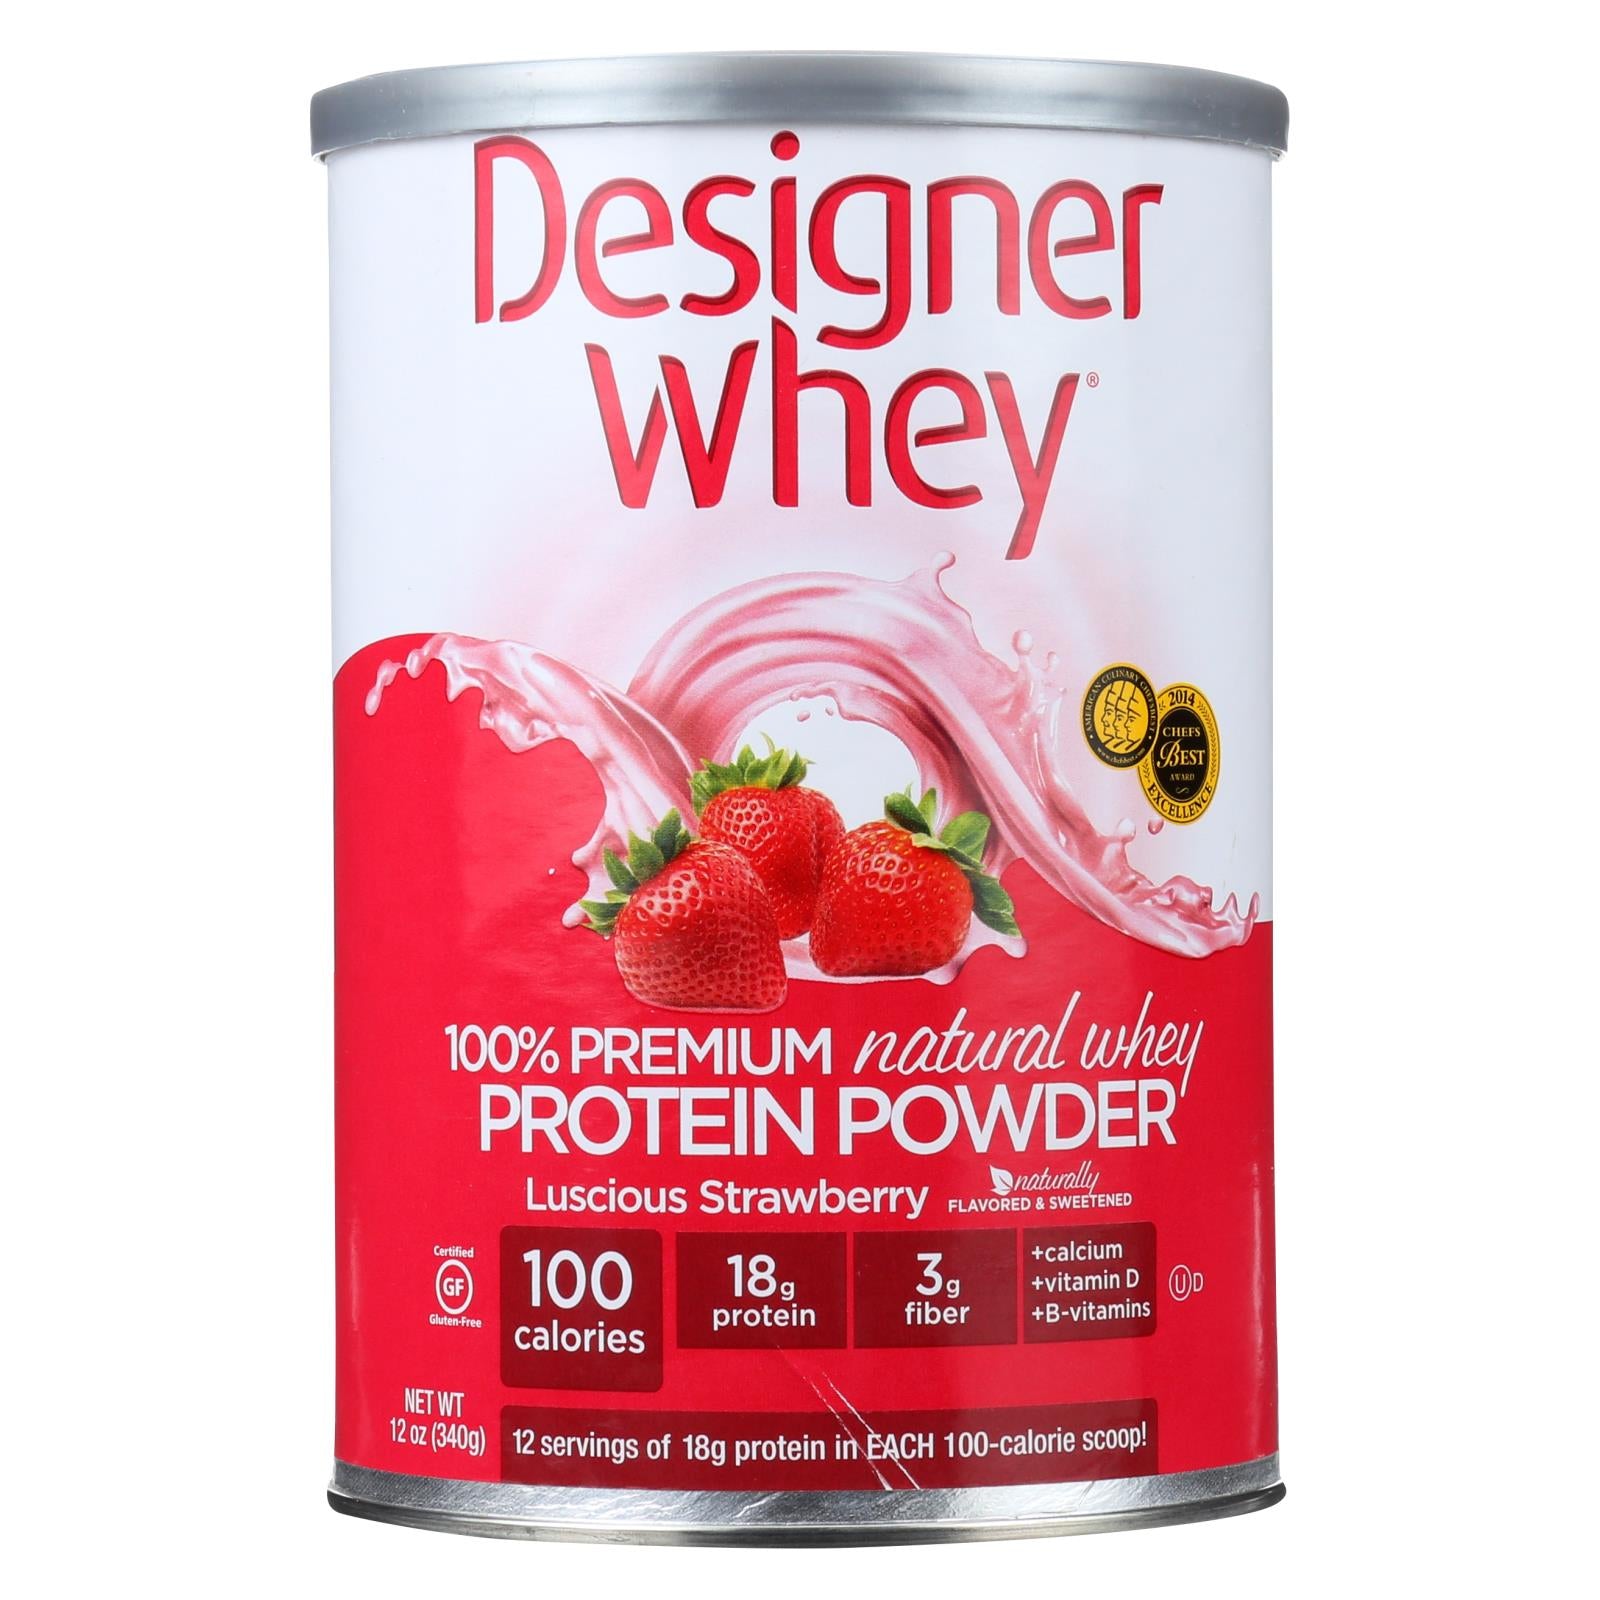 Designer Whey - Protein Powder - Natural Whey - Luscious Strawberry - 12 Oz - Whole Green Foods